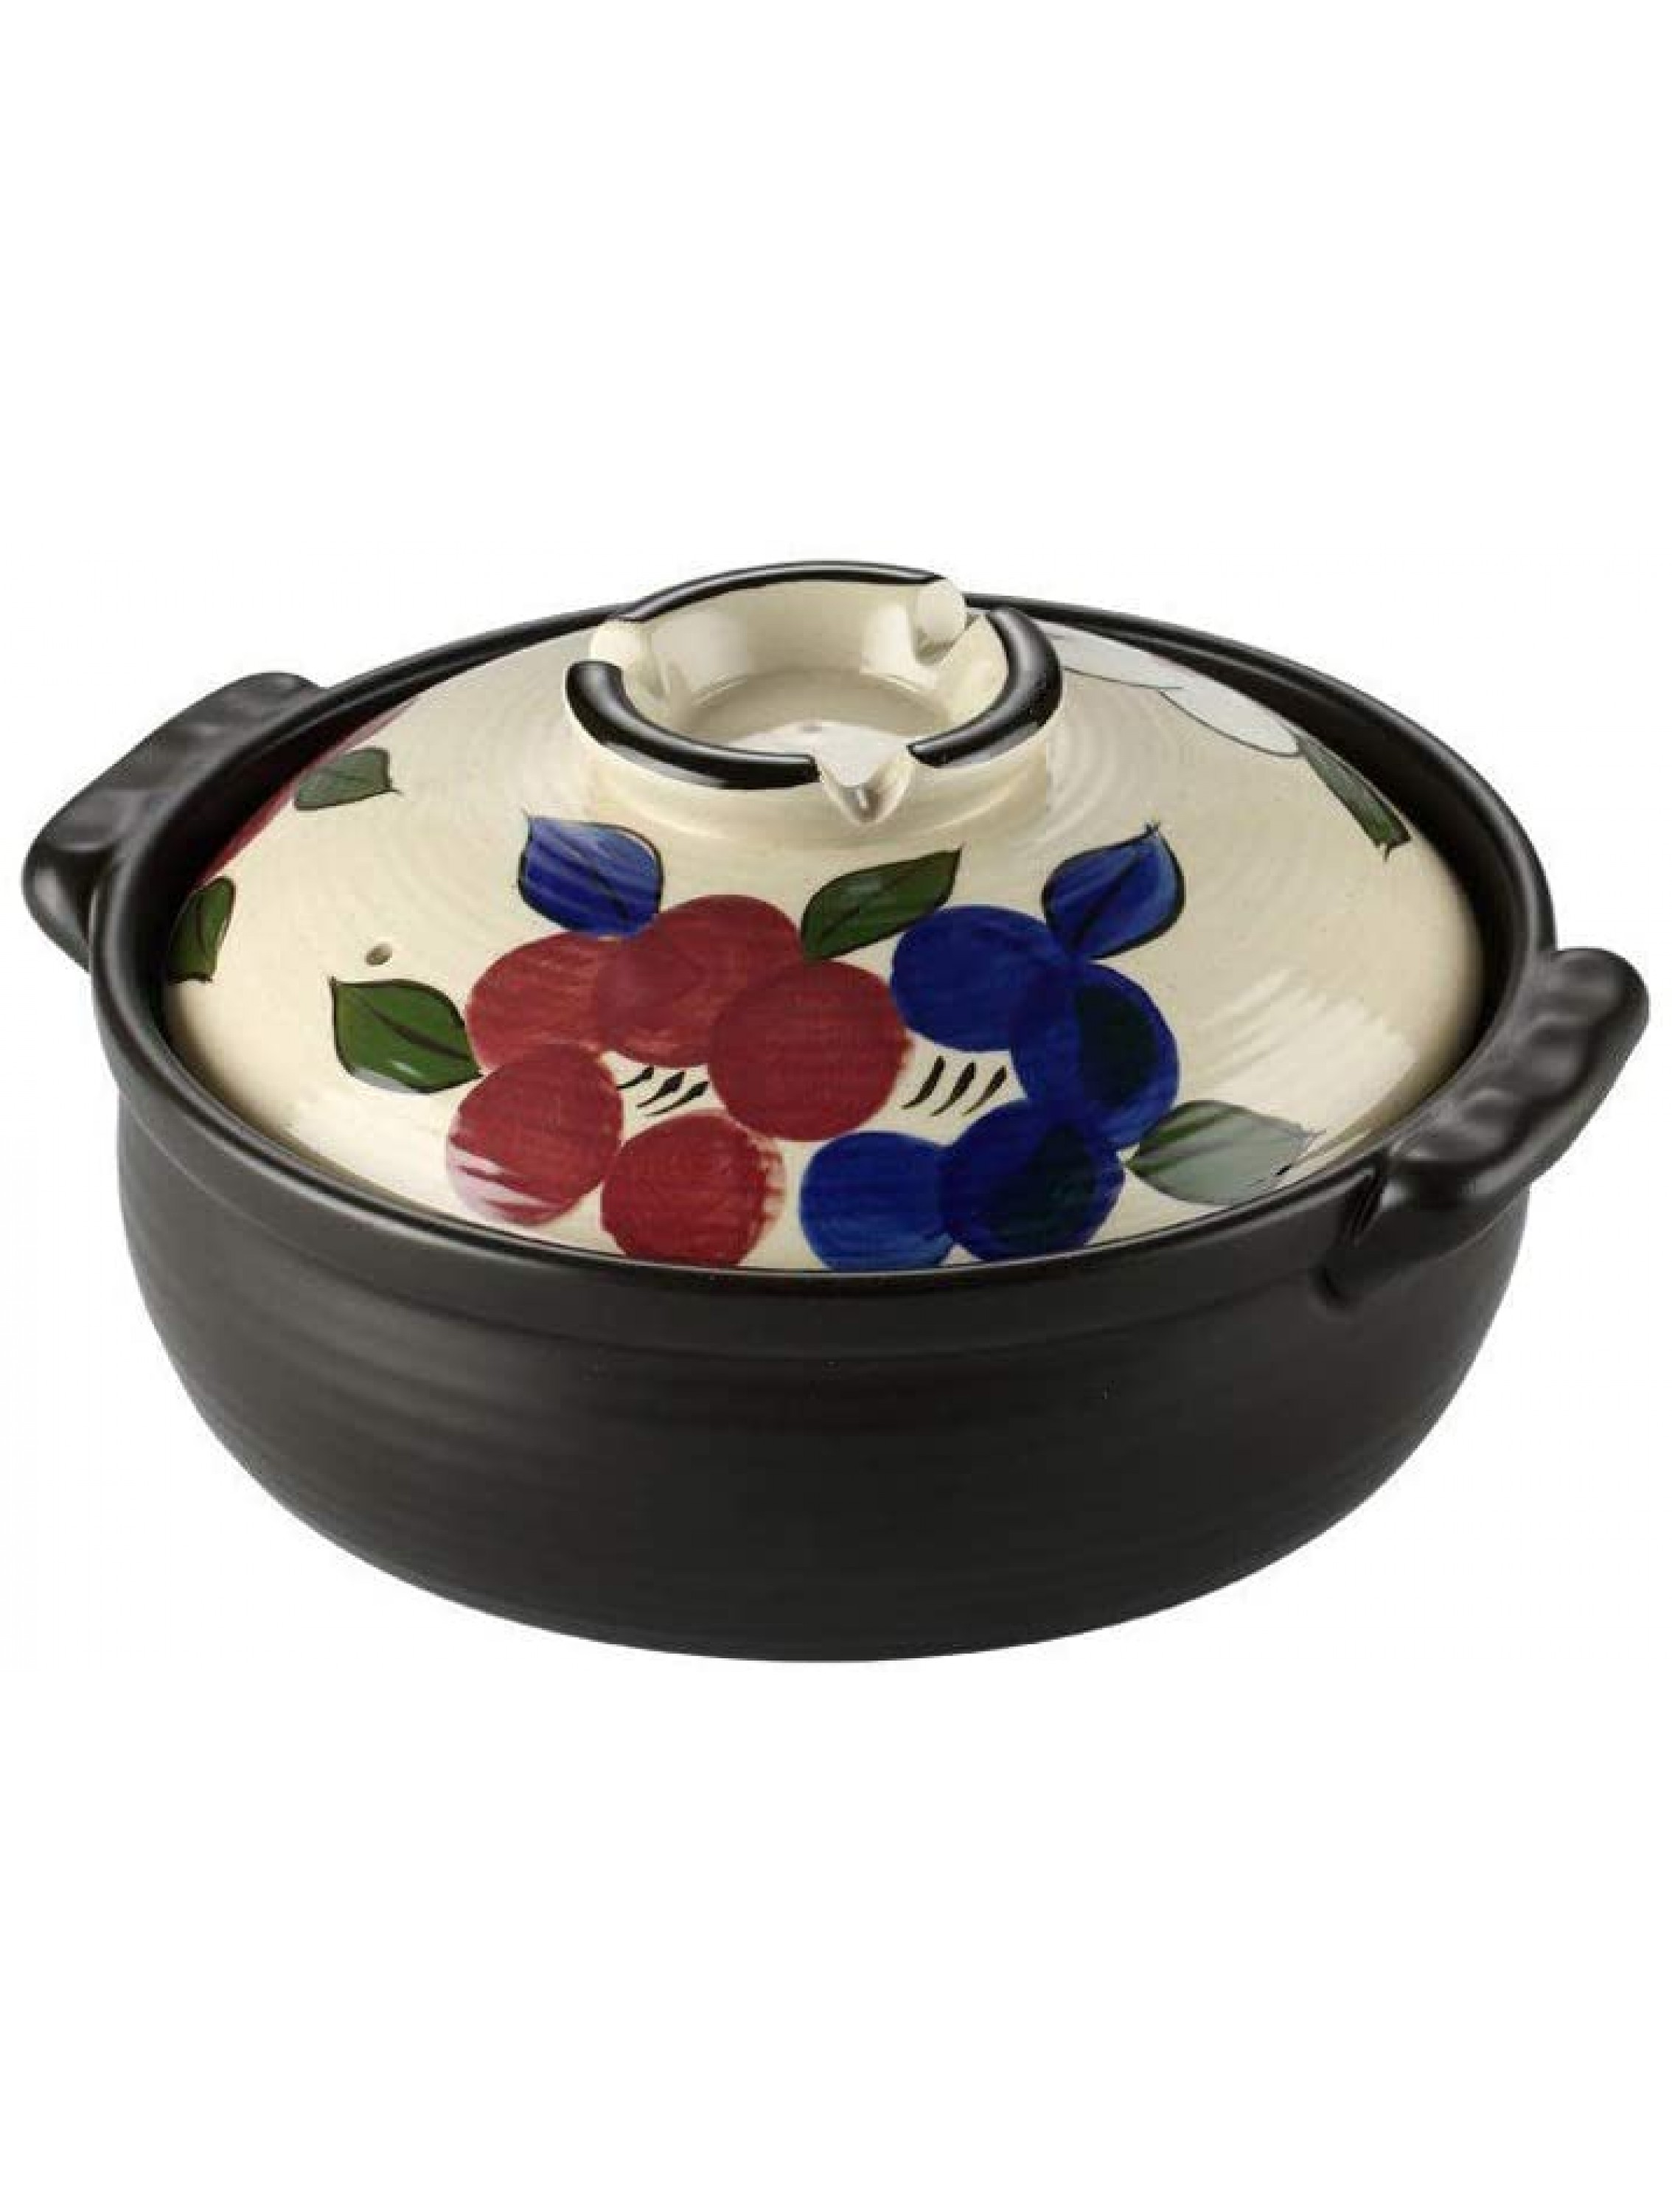 ZLDGYG Ceramic Casserole Modern Stew Pot Soup Pot Gas Stove Heat-Resistant Household Kitchen Supplies - BM11R6HHG